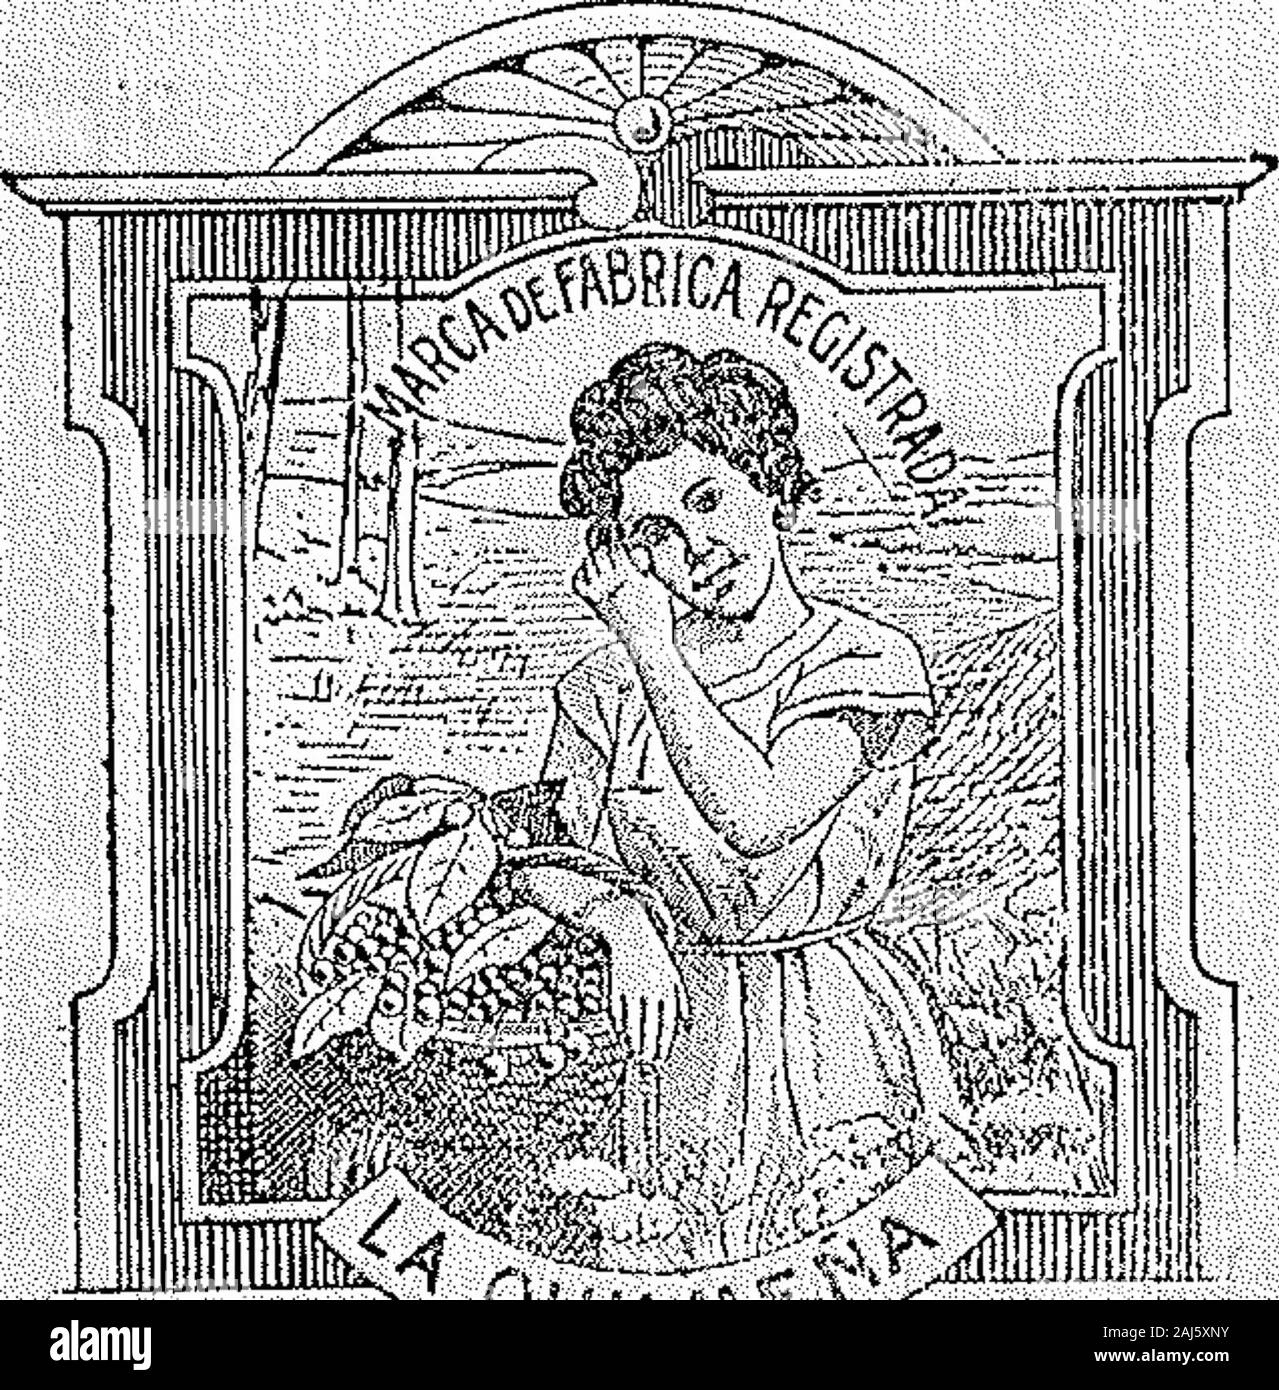 Boletín Oficial de la República Argentina 1903 1 ra sección. Müvo3n di l¡!i): l-. Ifsí.-pairi.- Distinguircomestibles, bol.Idas, licores, Vinos, aceites, ¿rrappas, n-Rua - s i;;;;;;;; ich sonsas, Soda, aperitivos, refrescos, ja-rabos v asjuas Minerales.-Al-Sina 1241. v-9-Jnnio.           -. Oct 2 de 1903.- Armengol é Hijos.-Honrar bebidas de Allgemeine, especial - mente licor kirsch Wasser.-B. Mitre 343., v-9 Oct. Aciit K. 12.040 Oct 2 de 1003-Ronconi v üaLlolfo.-Honrar comestibles, Bebidas, licores, Vinos, aceites, Cafe, Te. yerba-mate, Fresken, Aguas Minerales y xaseosas engeneral. Alsina 1 -, Stockfoto